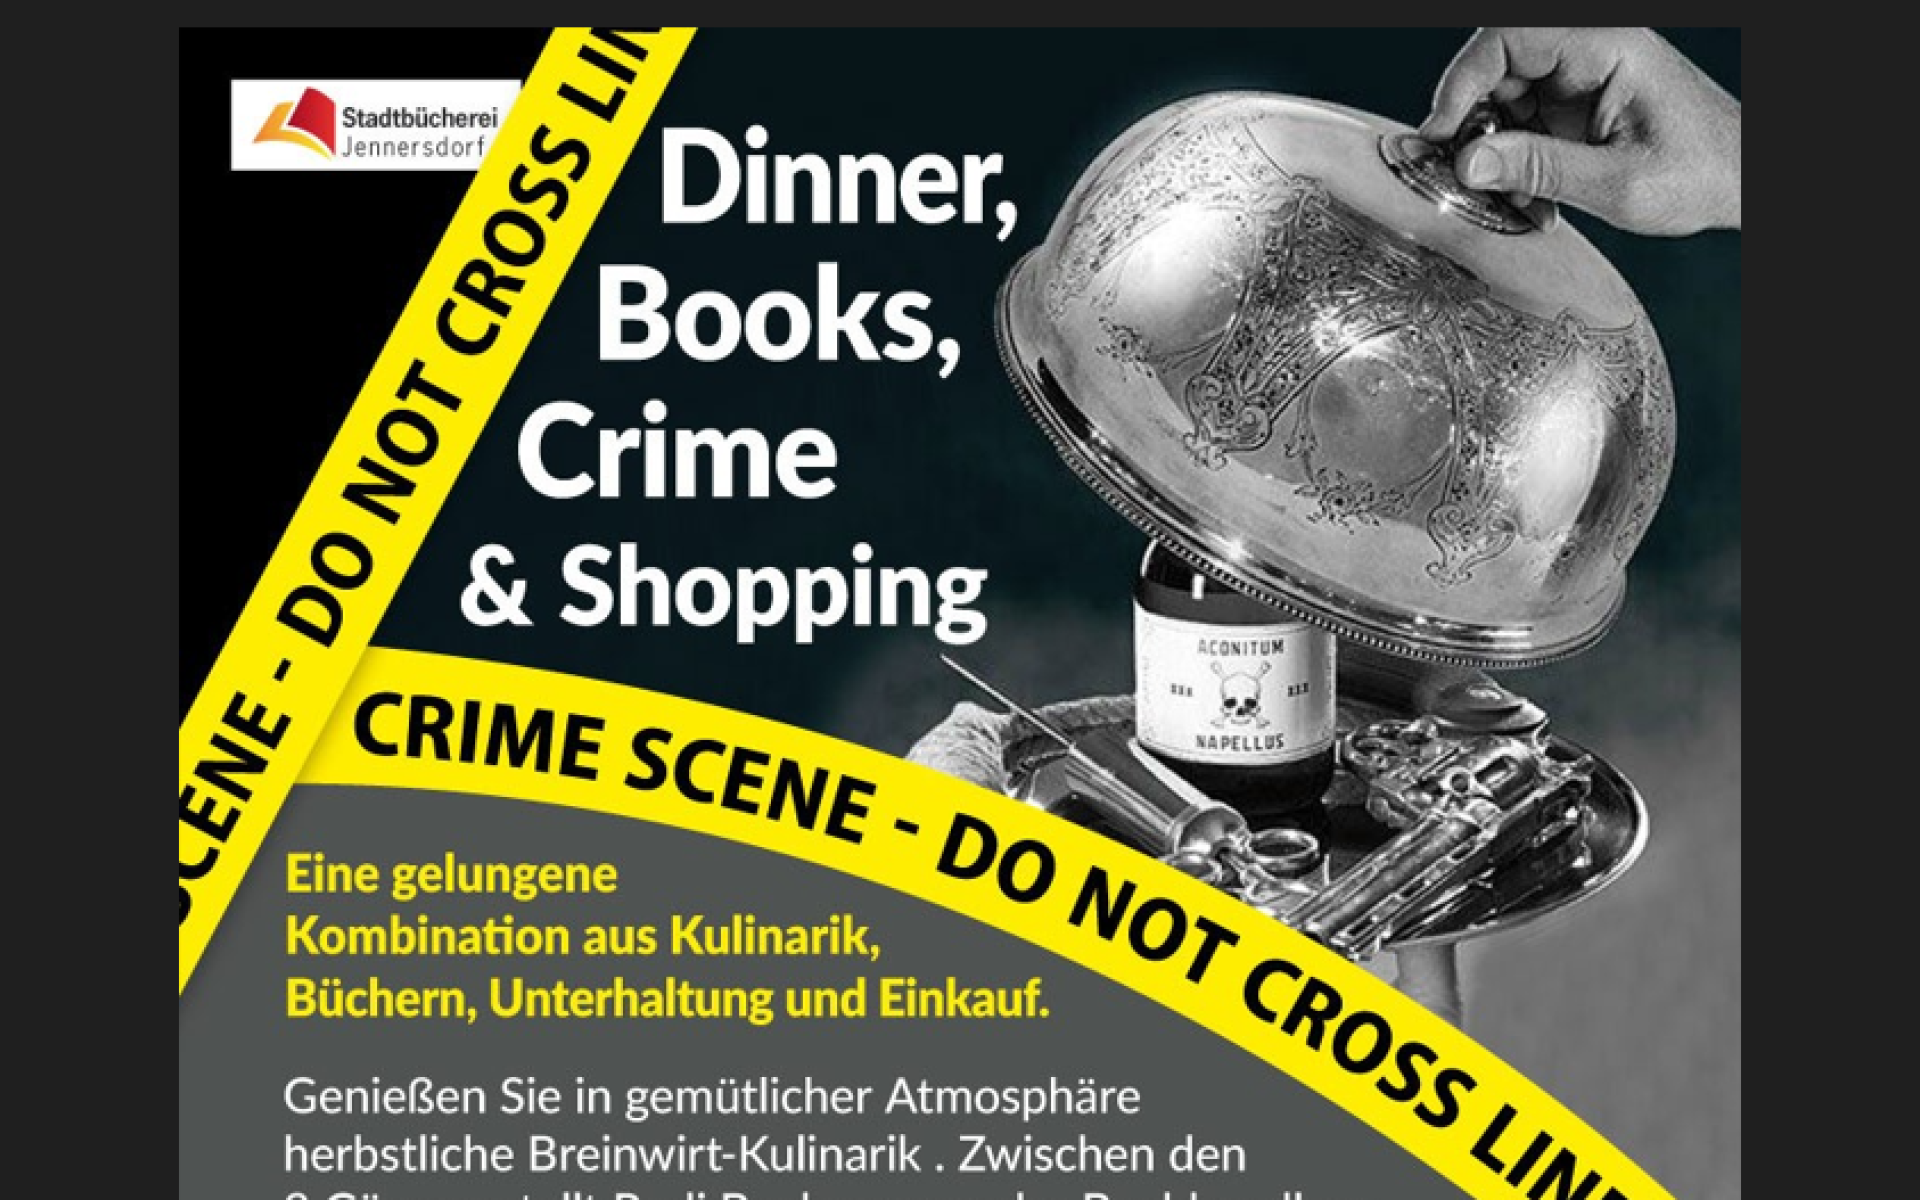 Dinner, Books, Crime and Shopping